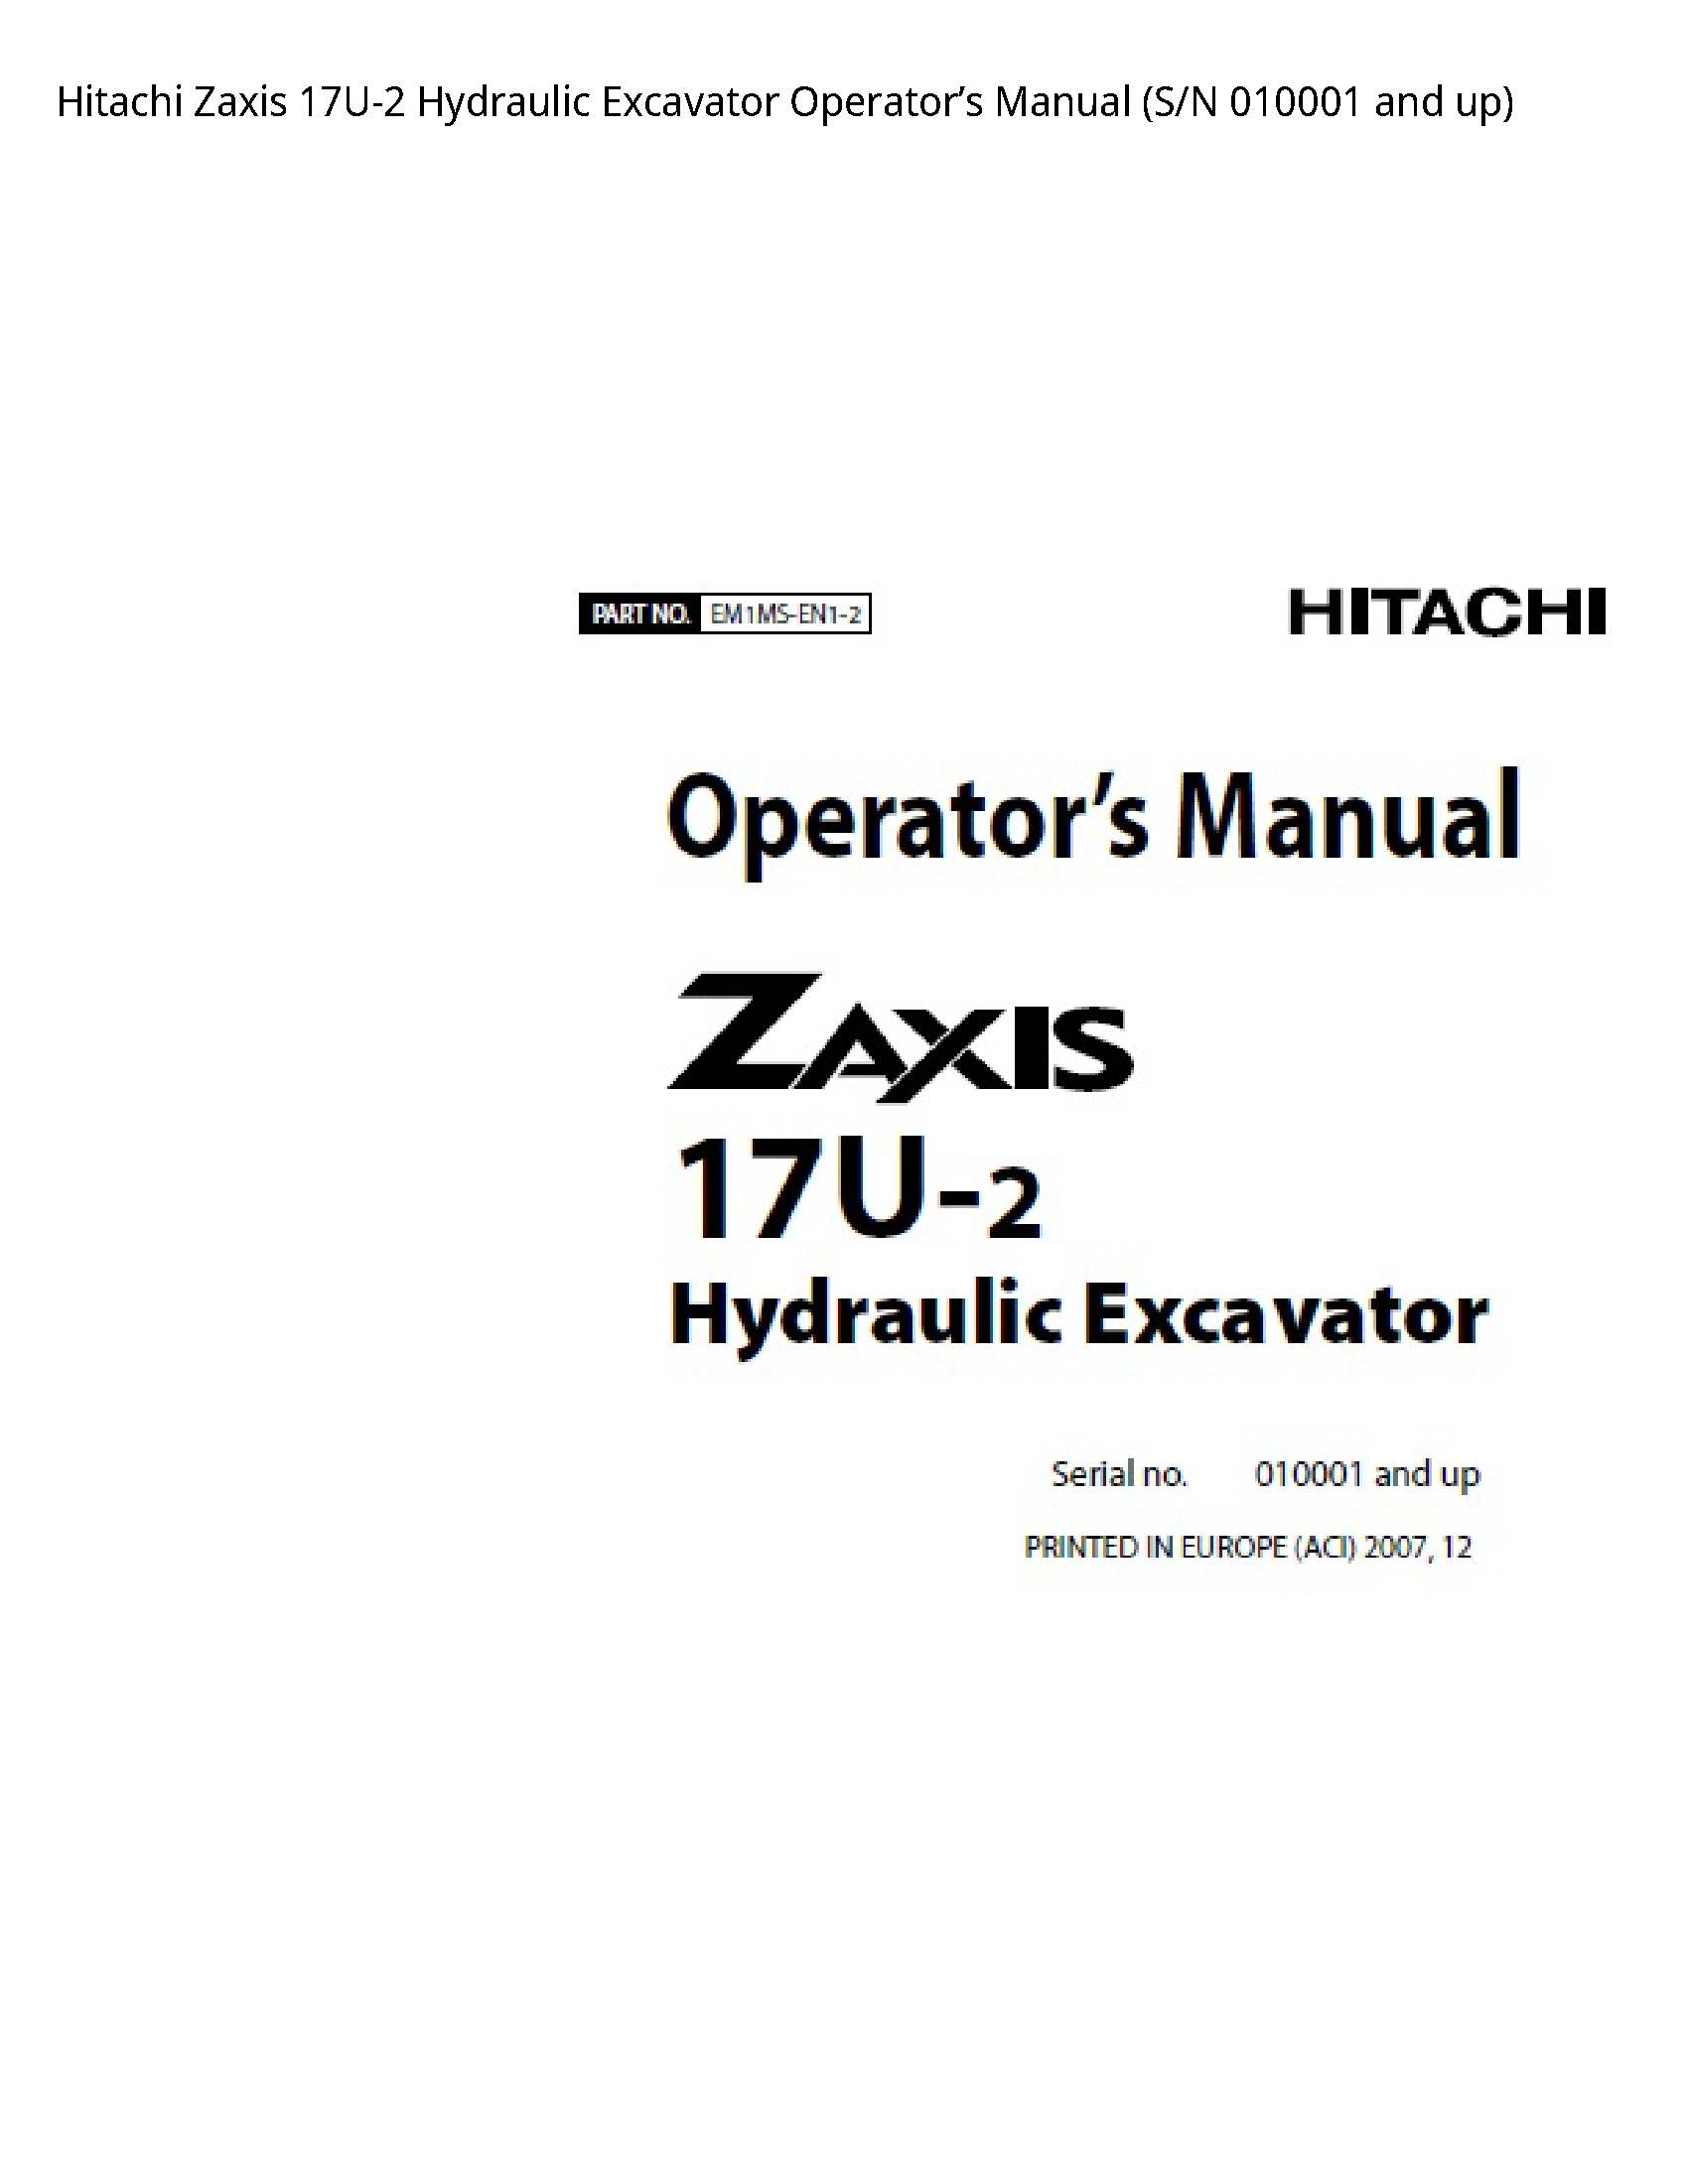 Hitachi 17U-2 Zaxis Hydraulic Excavator Operator’s manual